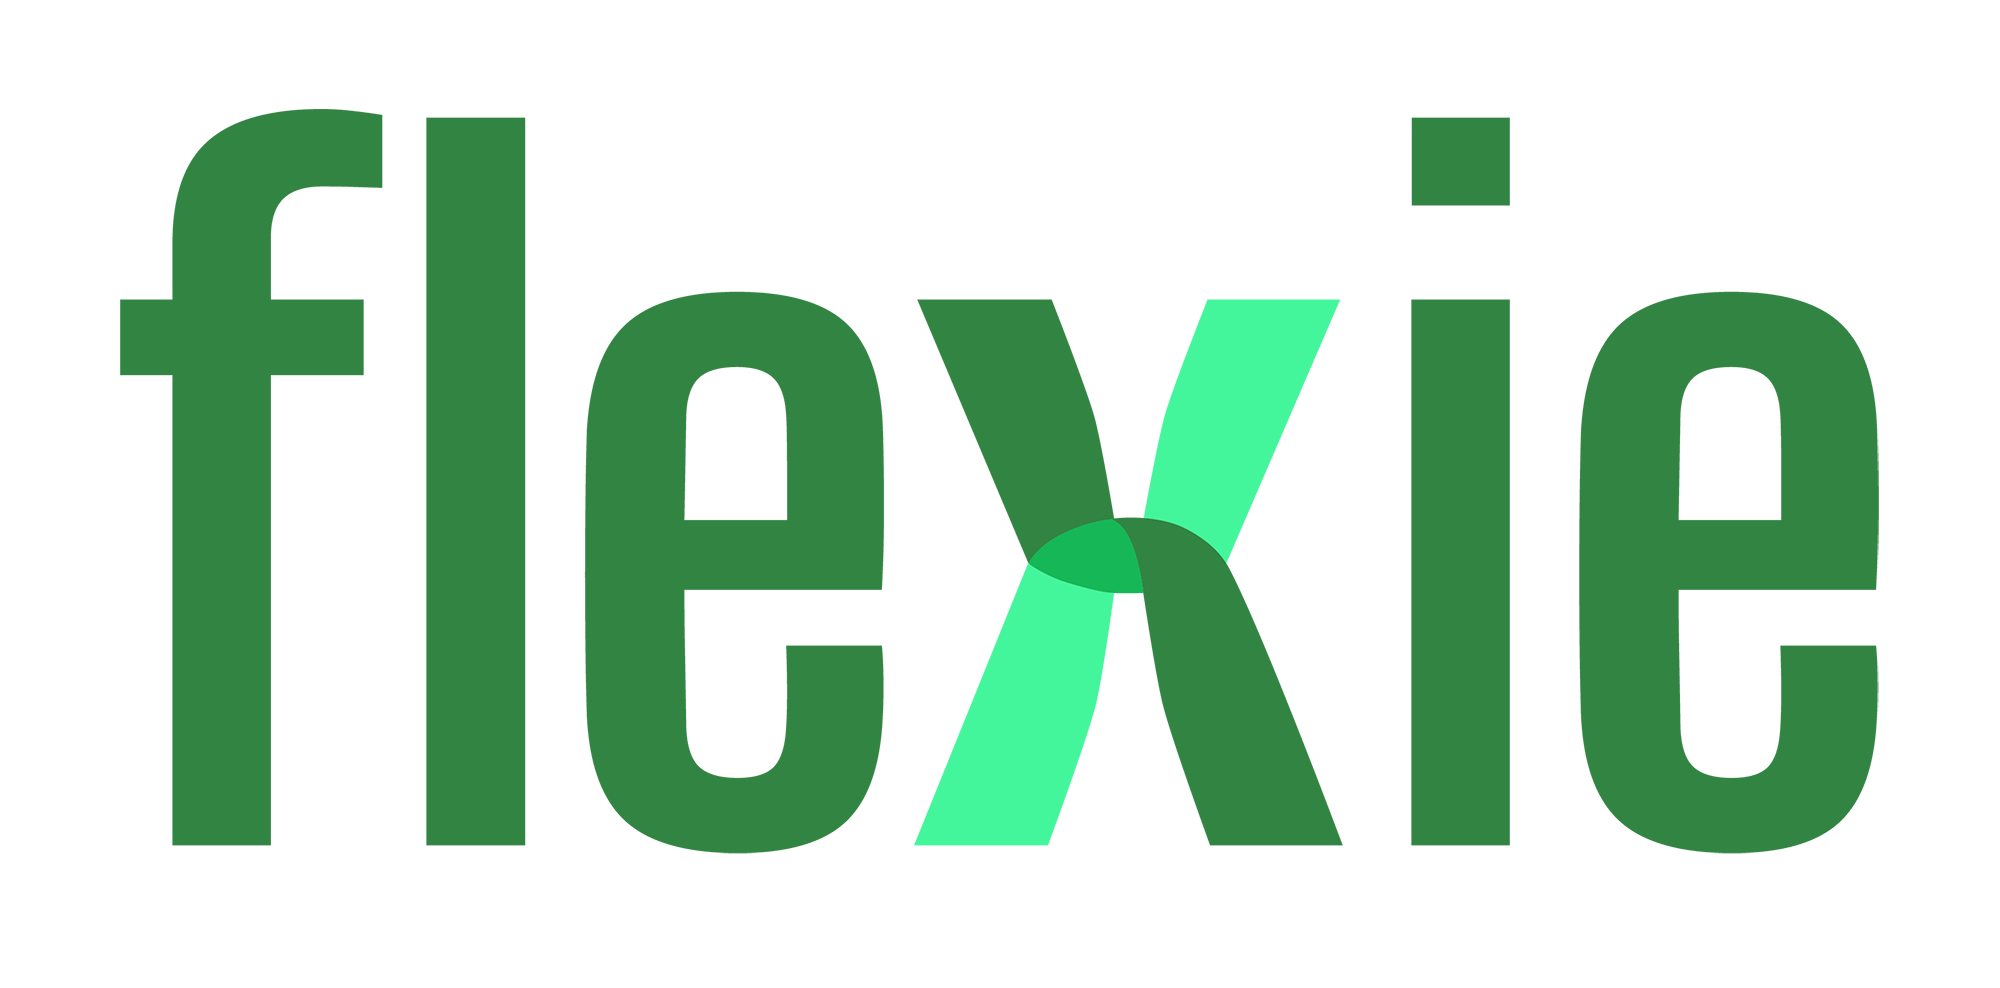 Flexie : Brand Short Description Type Here.